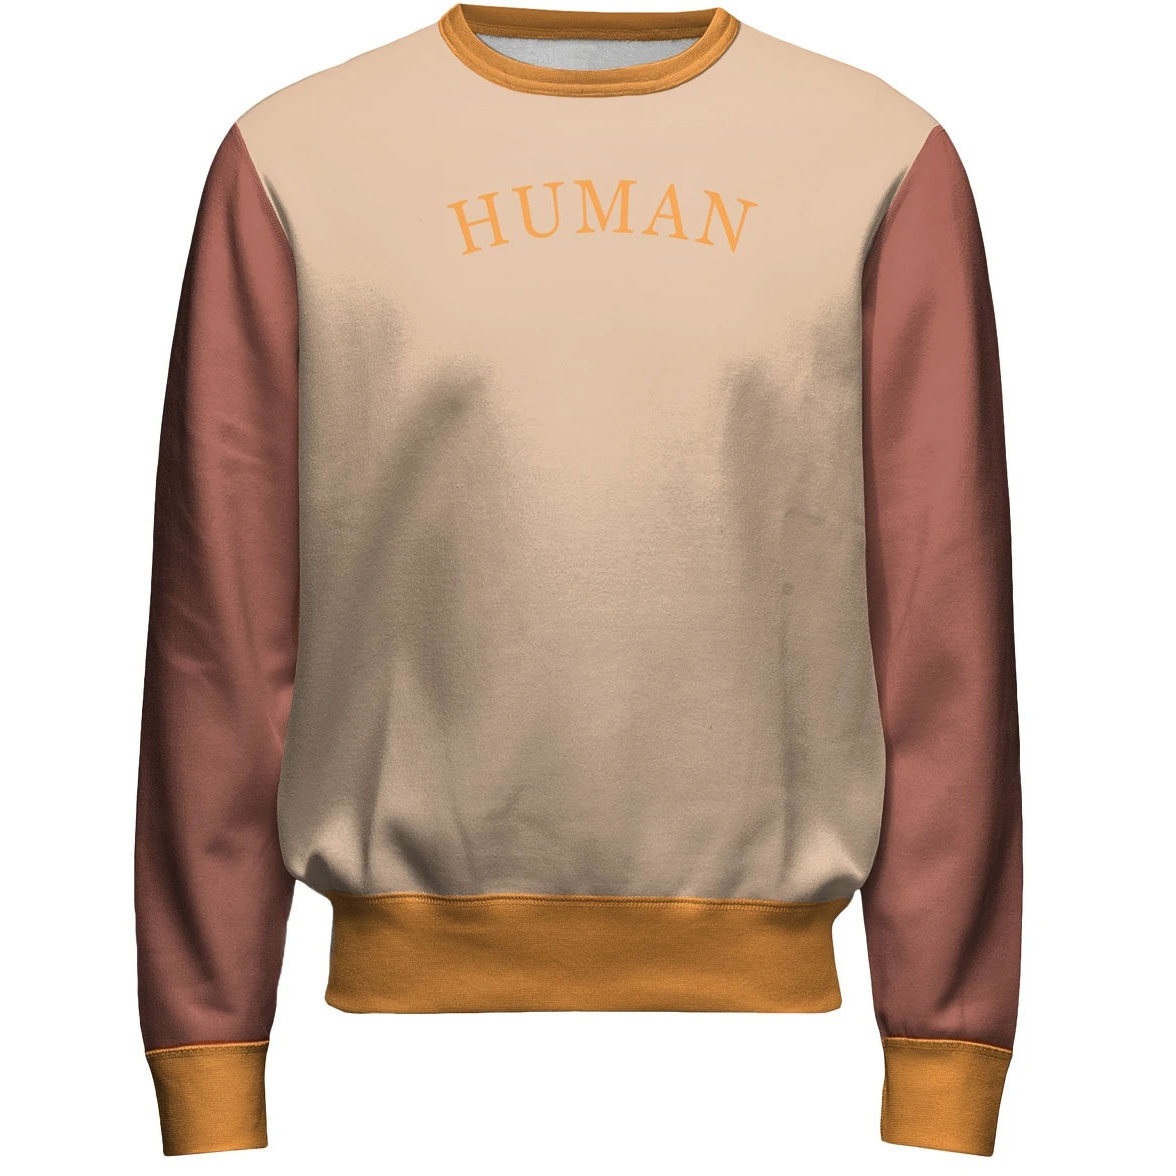 Human Sweatshirt 